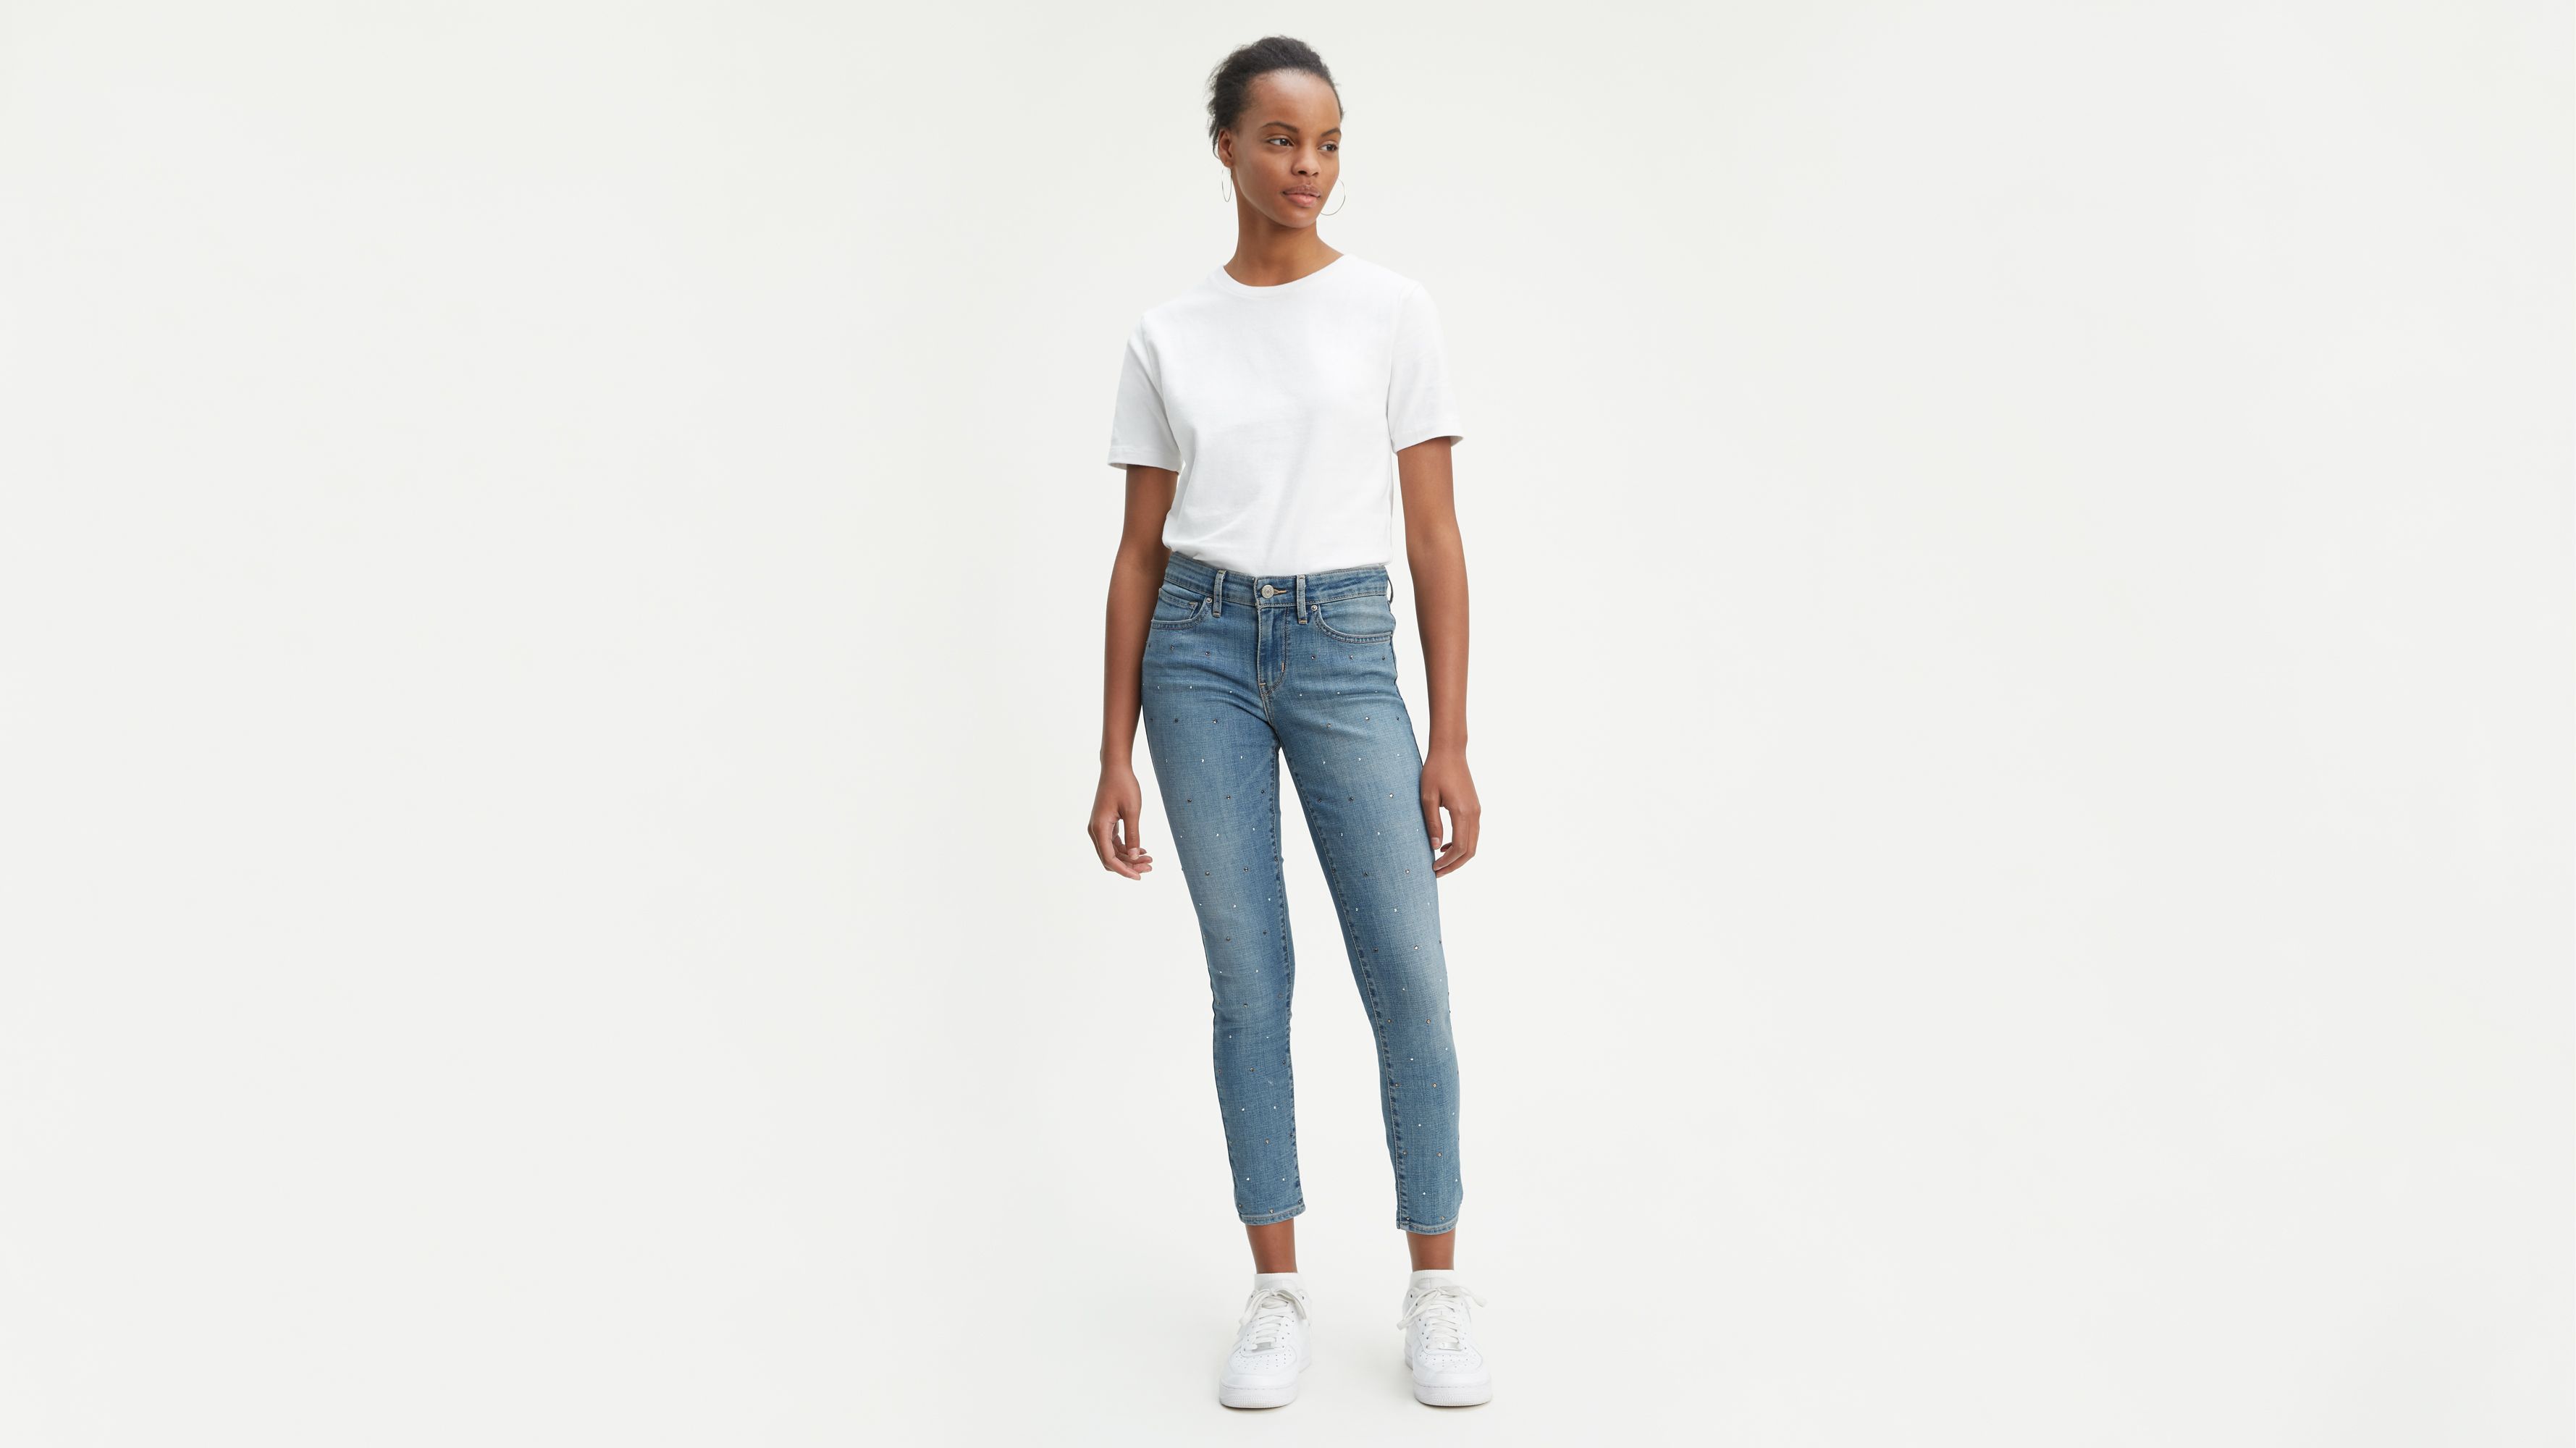 levi's women's 711 skinny ankle jeans